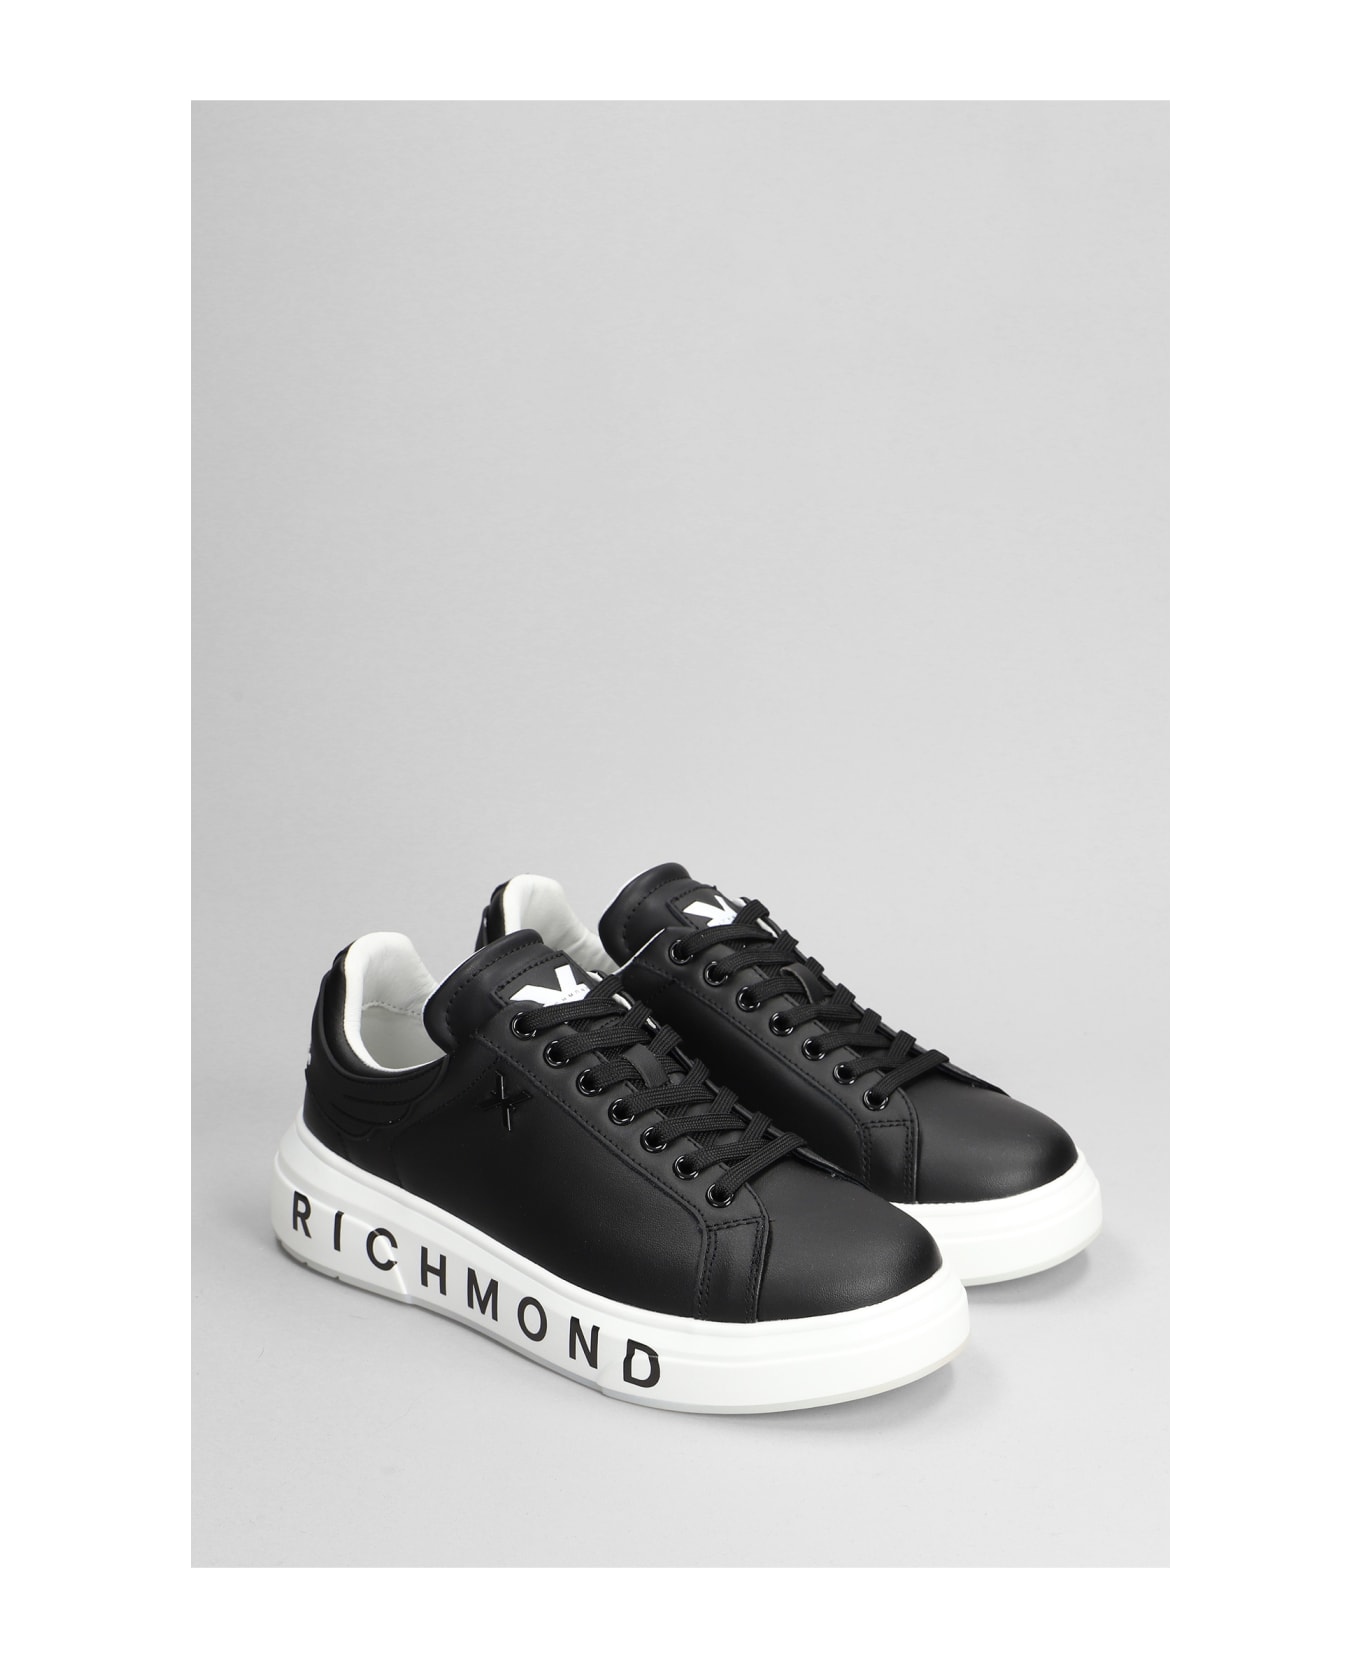 John Richmond Sneakers In Black Leather - black スニーカー